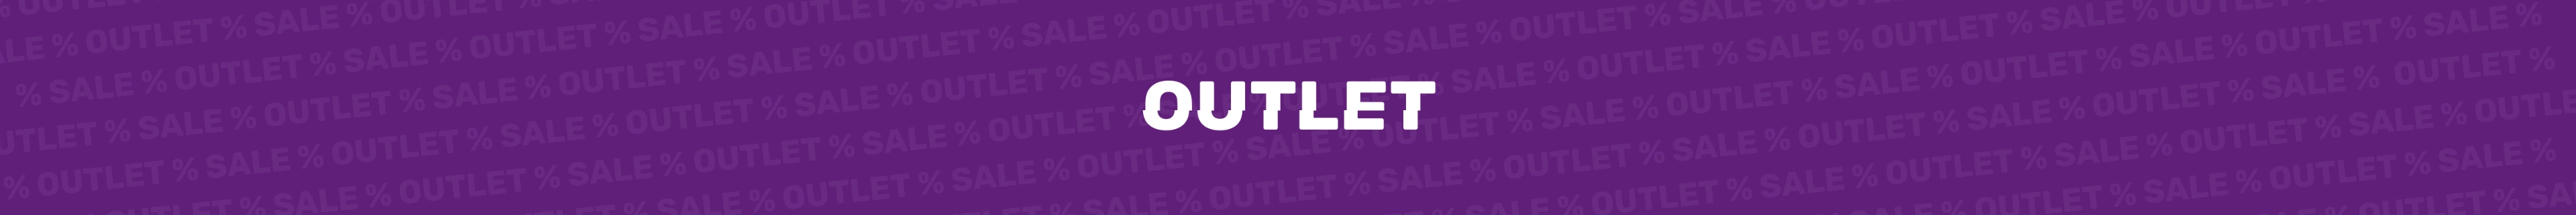 Outlet Produkte banner